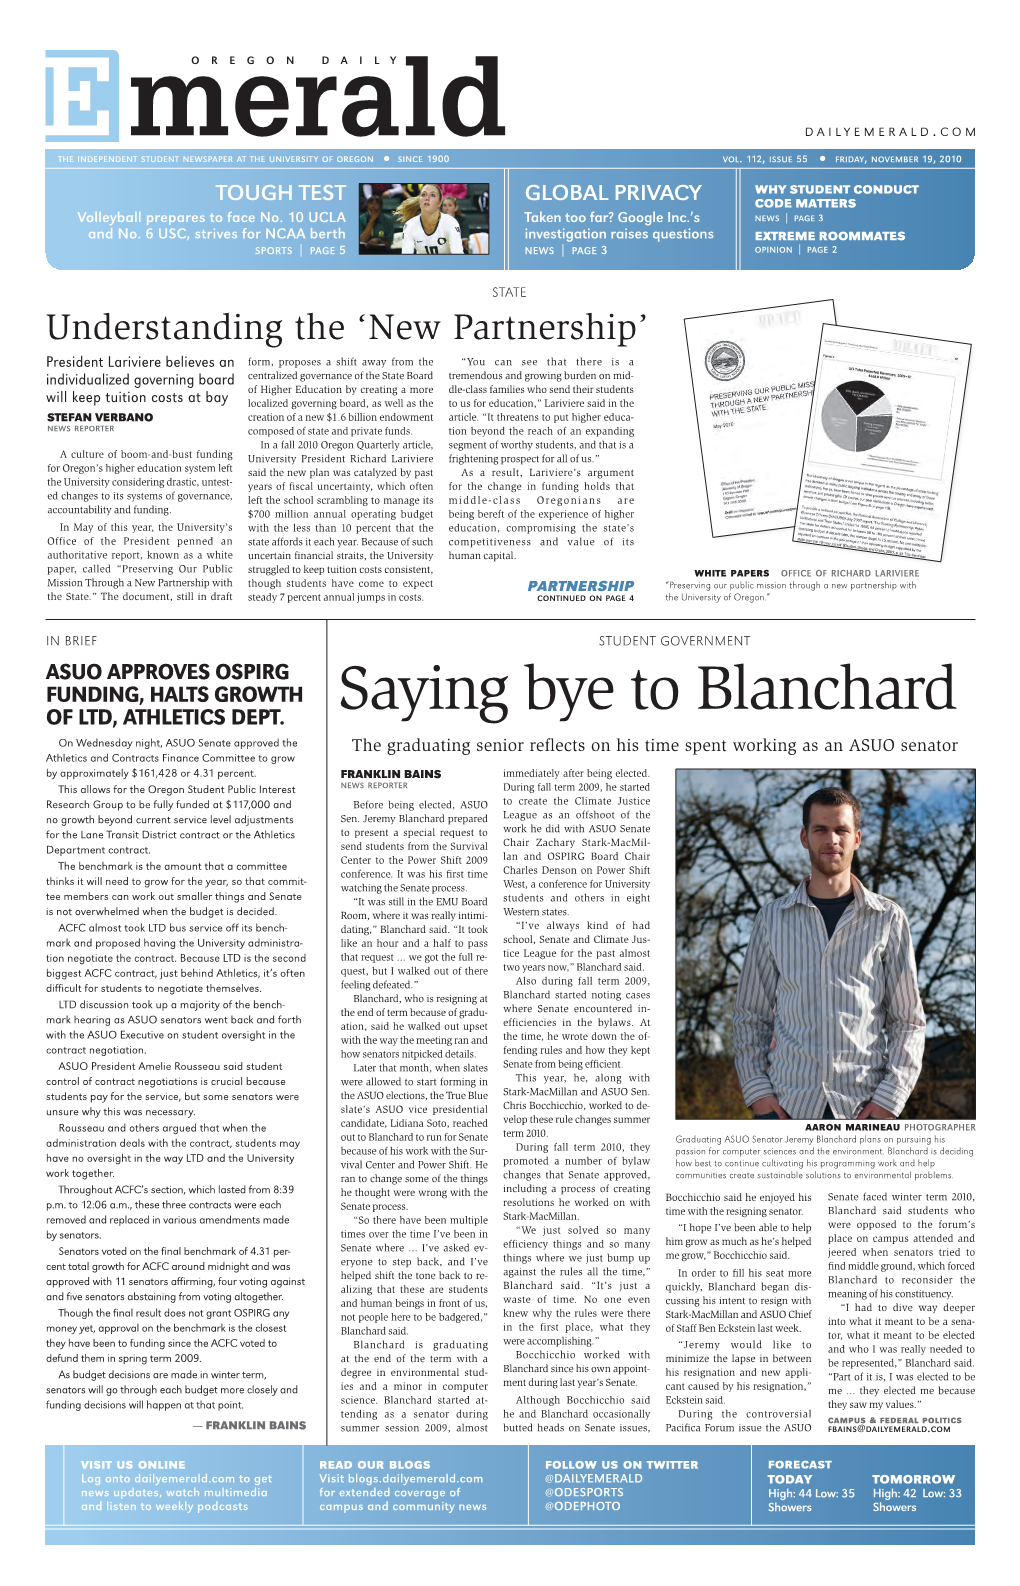 Saying Bye to Blanchard